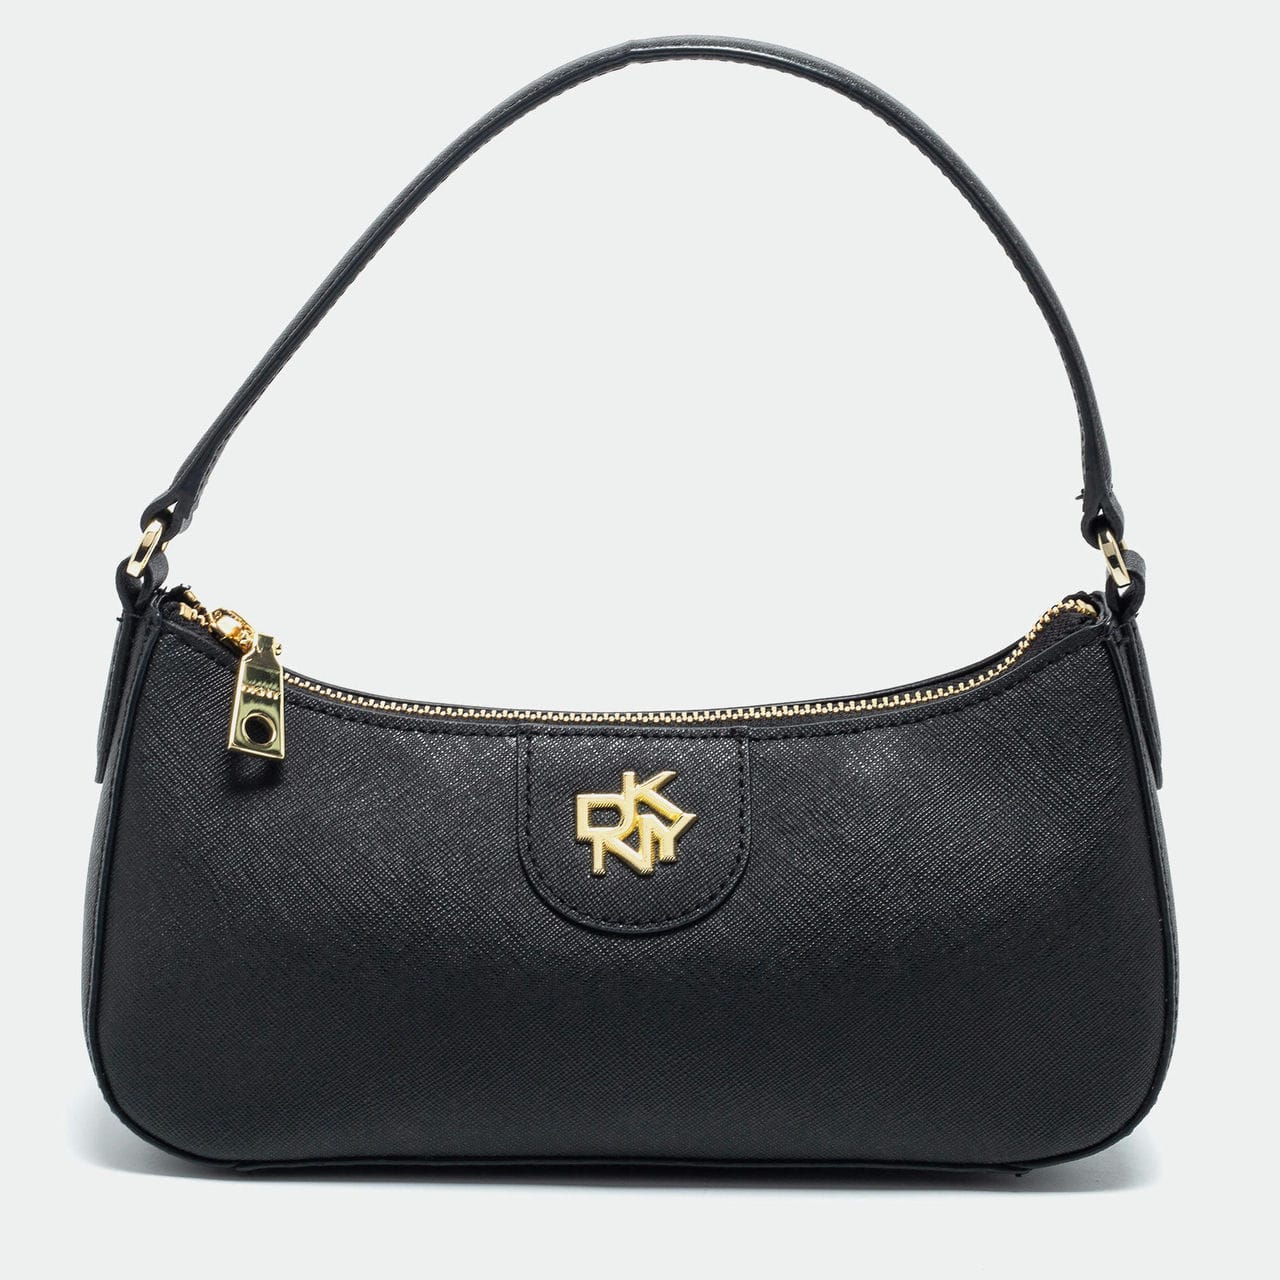 DKNY Delphine Double Zip Crossbody, Black/Gold: Handbags